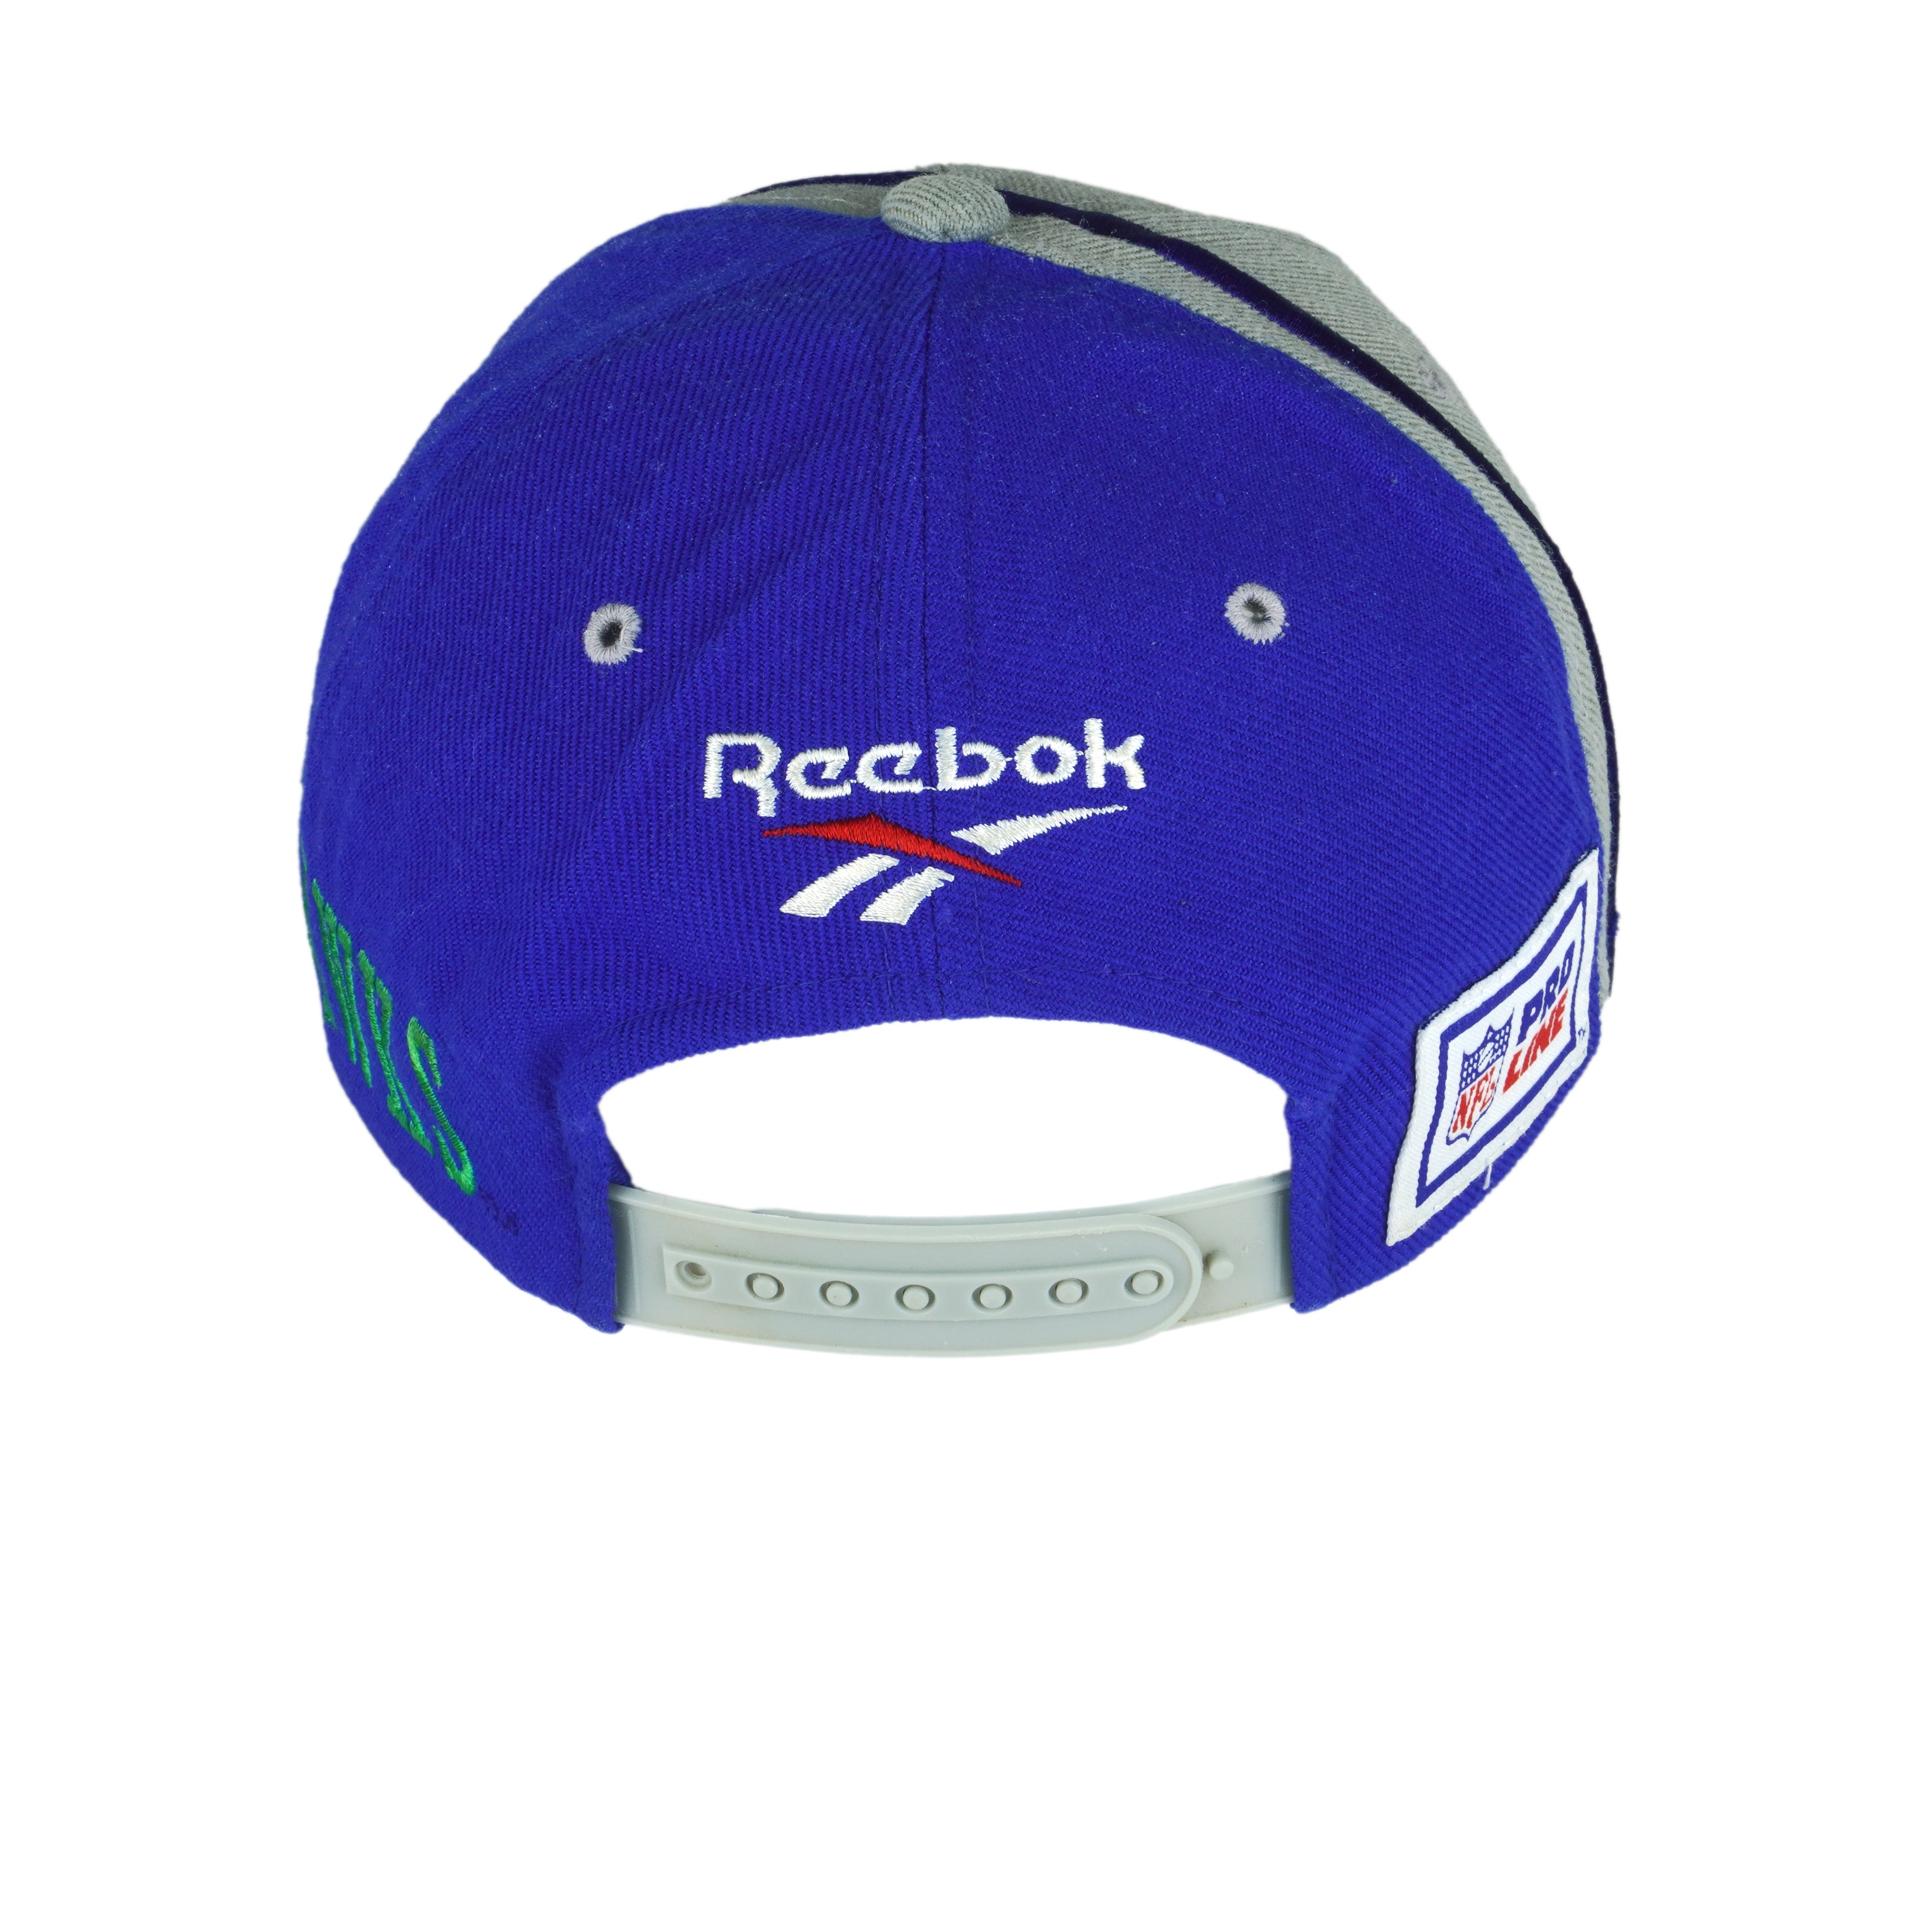 Reebok - Seattle 'Seahawks' Snapback Hat 1990's Vintage Club Clothing